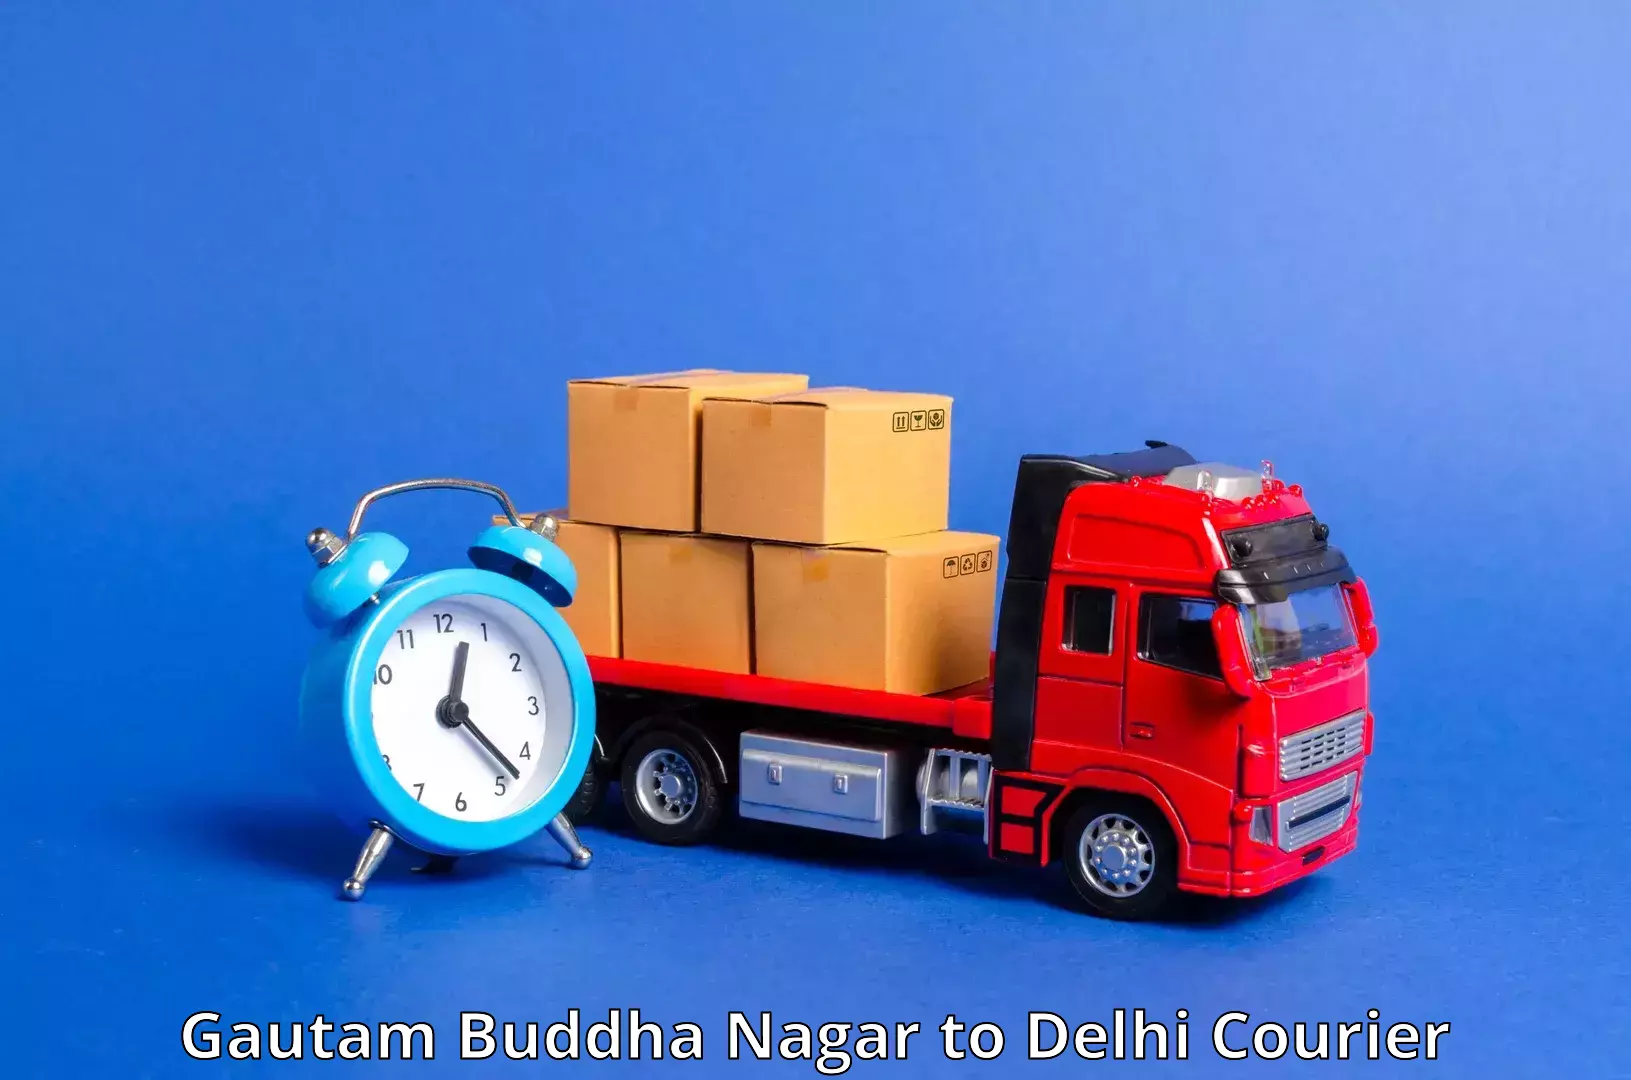 Courier service innovation Gautam Buddha Nagar to Delhi